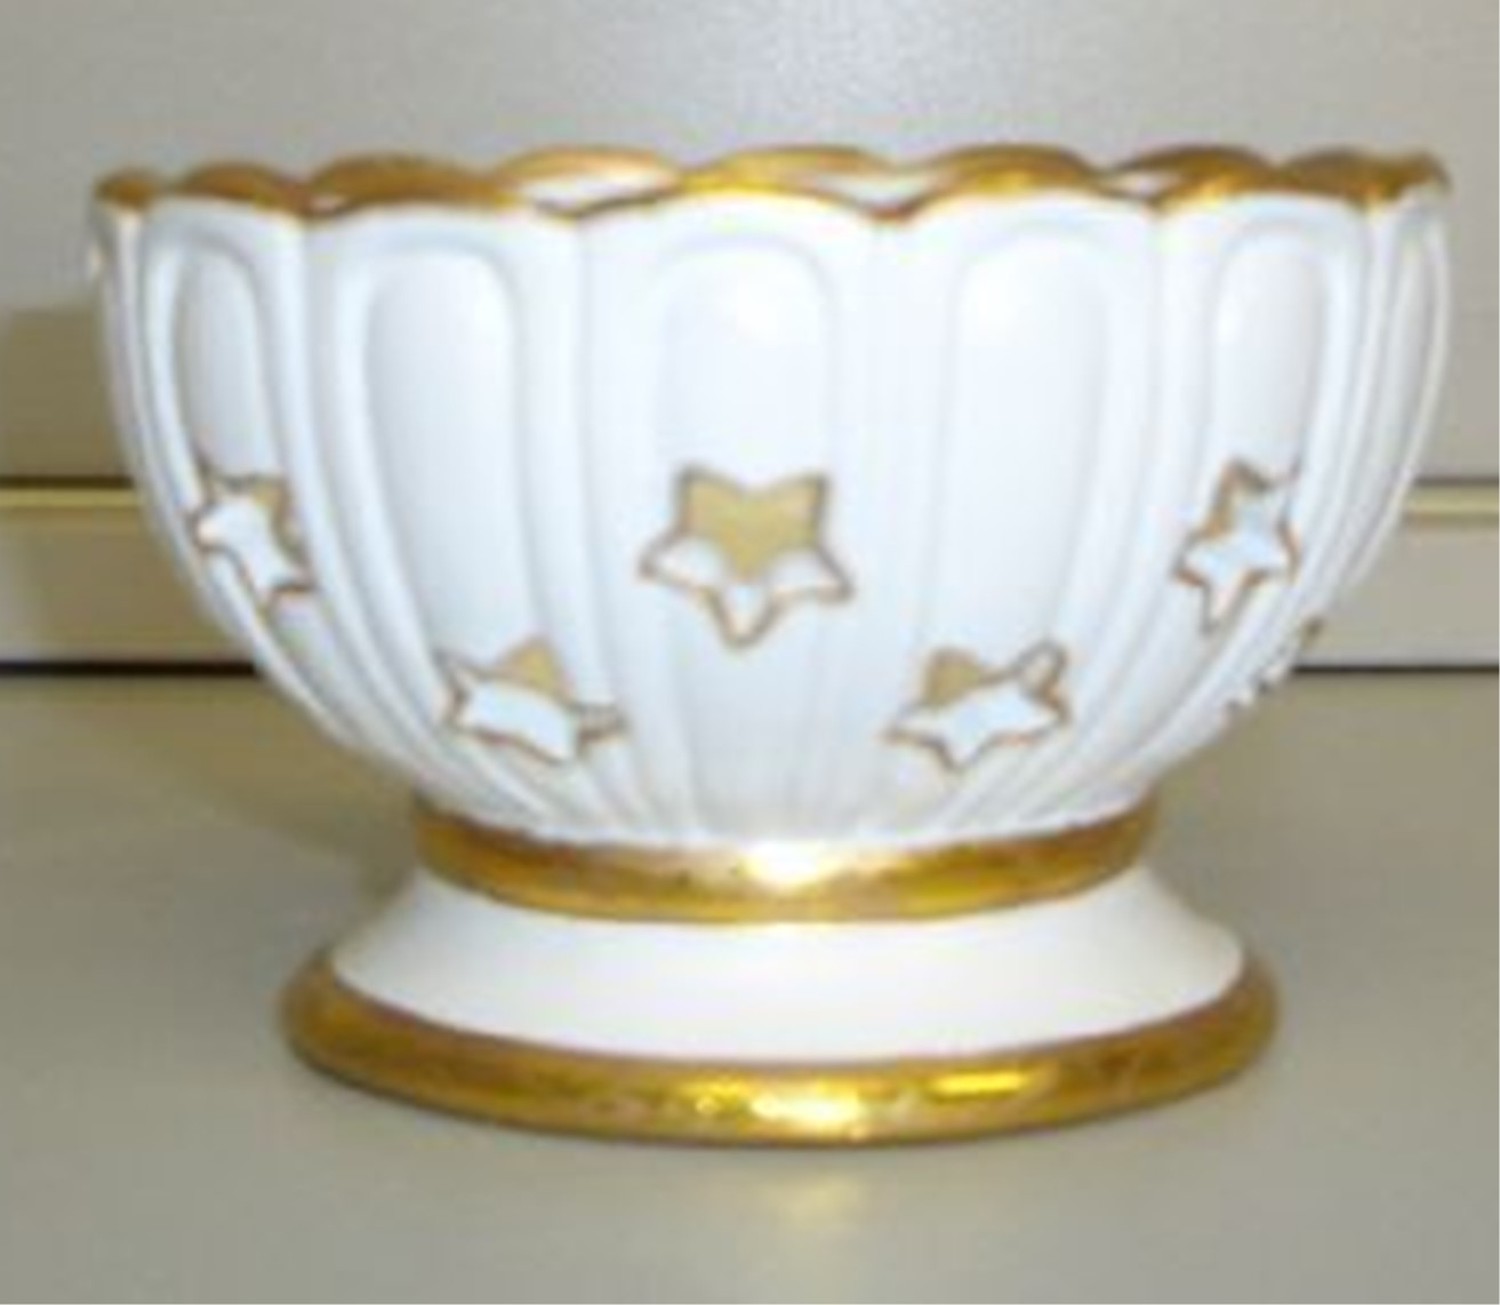 Windlicht Pokal, Material: Porzellan, Farbe weiss/gold